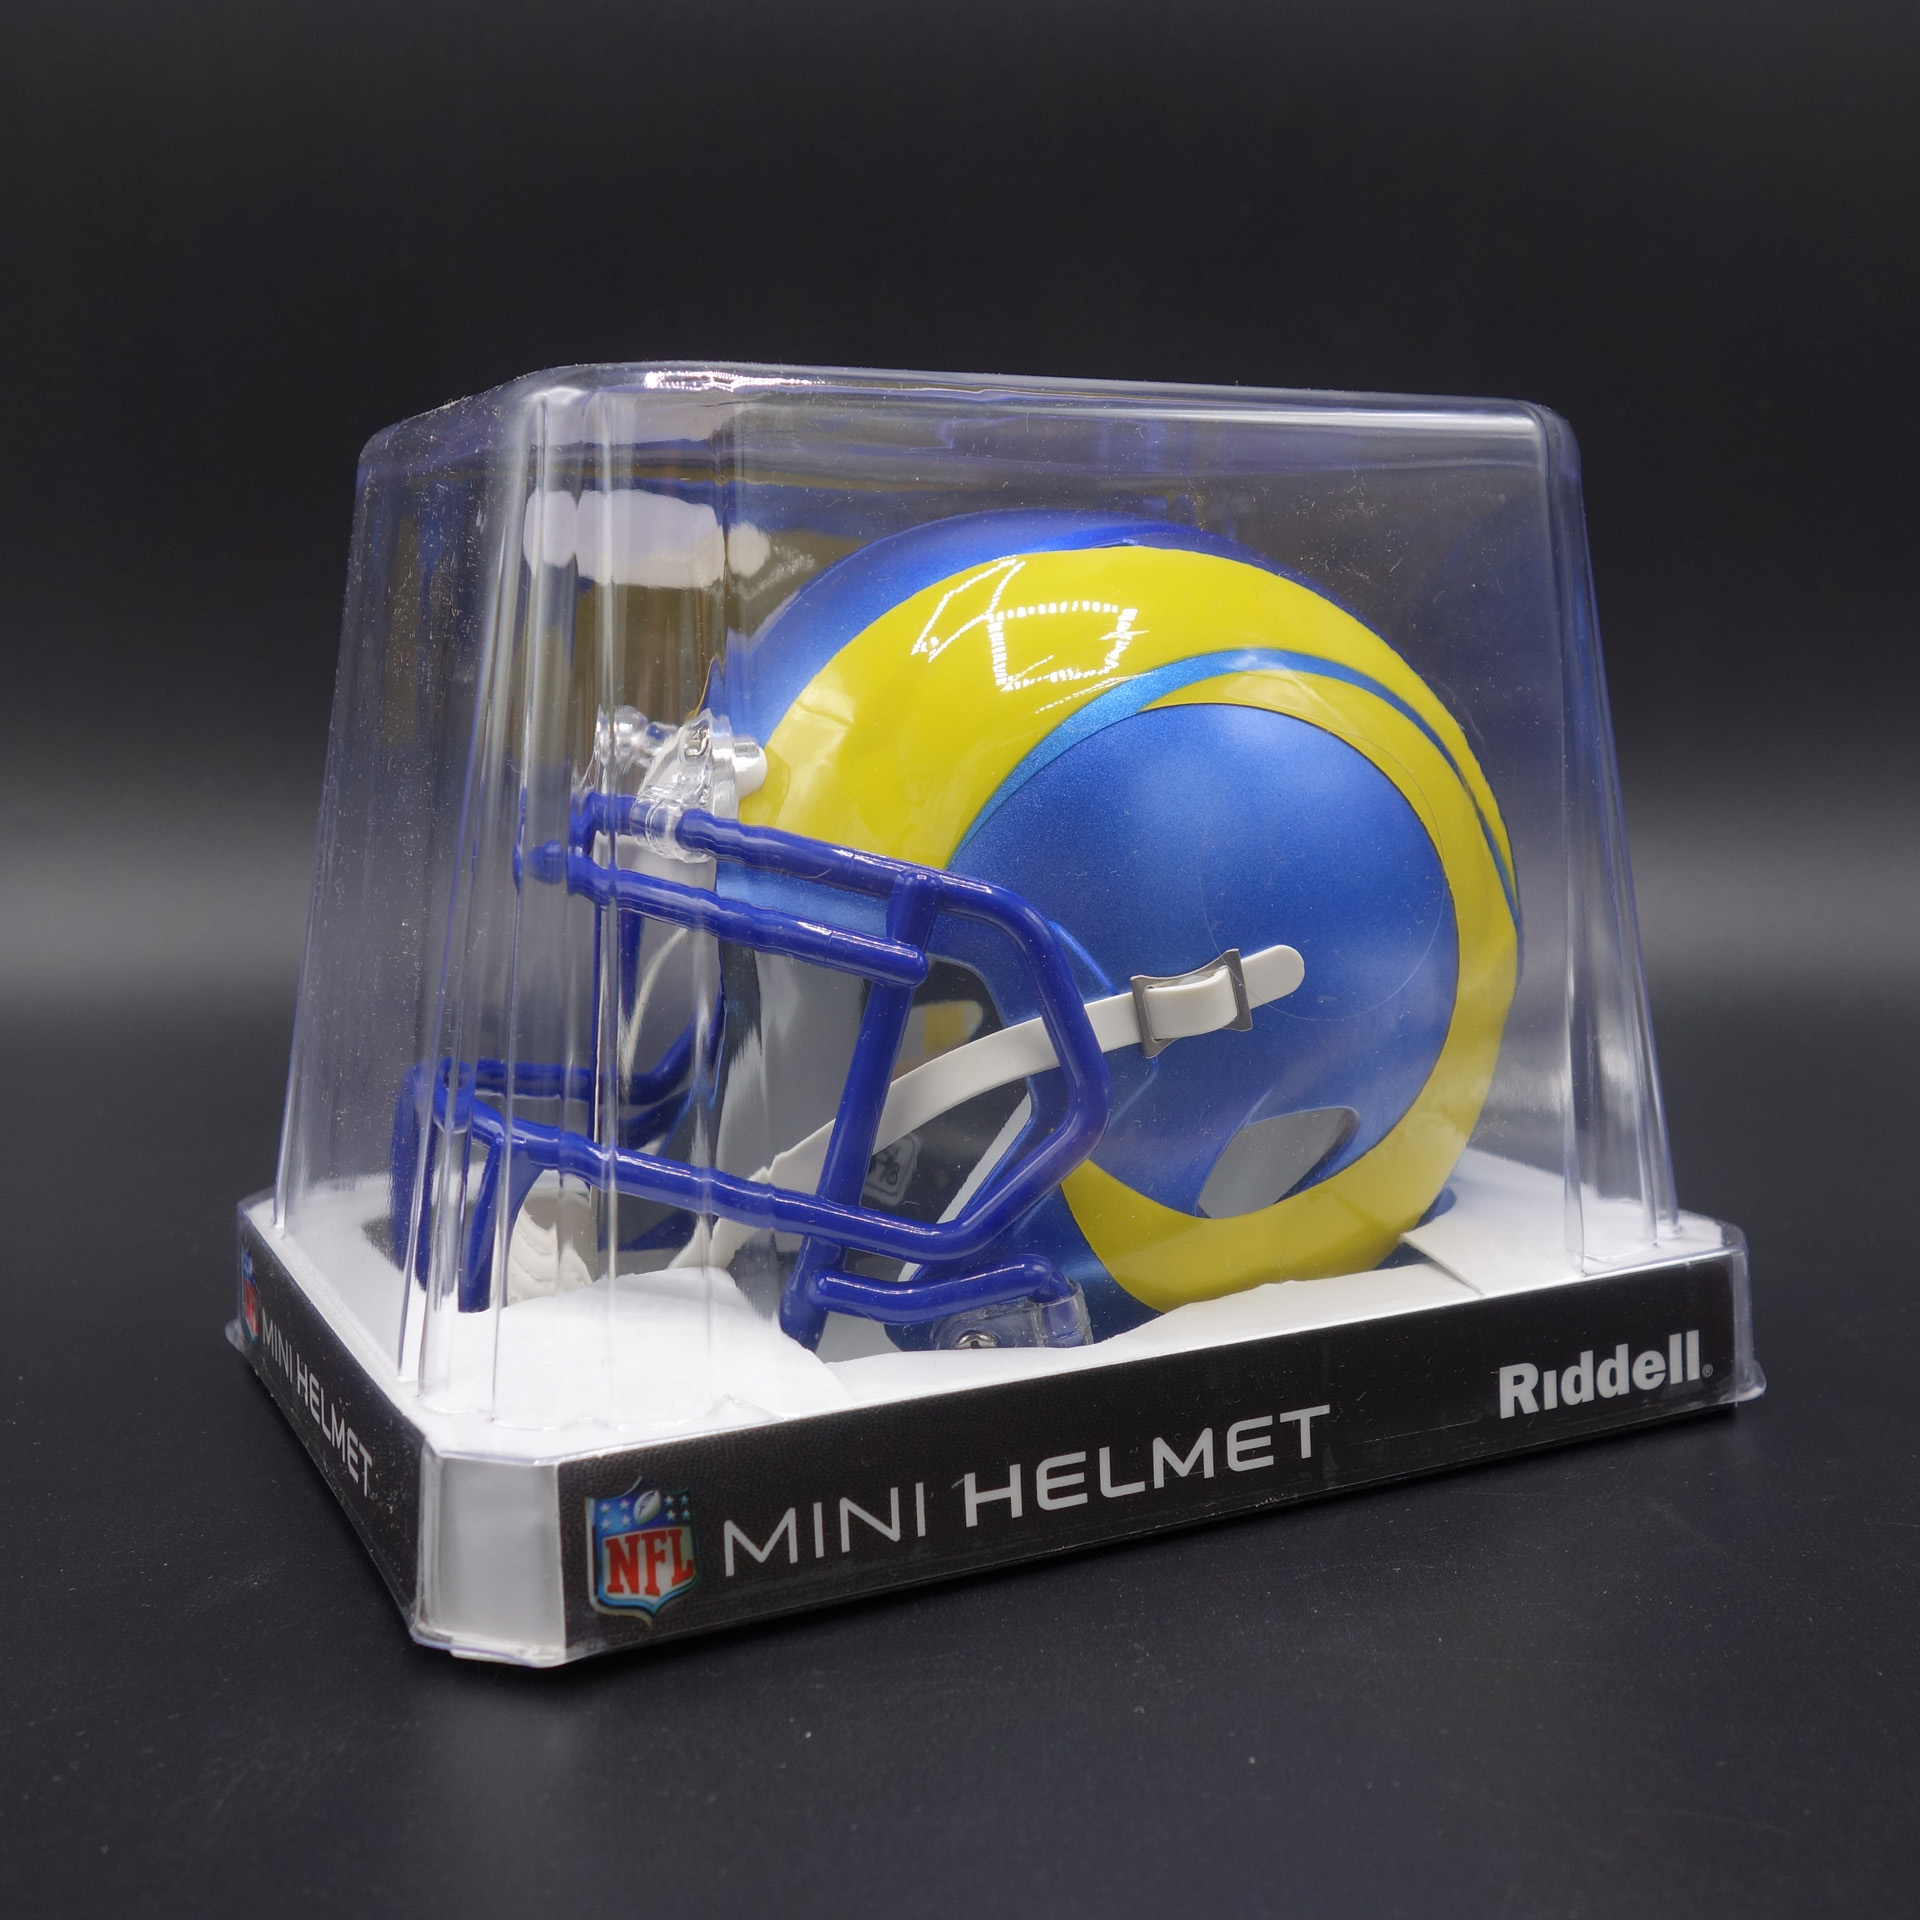 NFL Los Angeles Rams Riddell Helm Speed